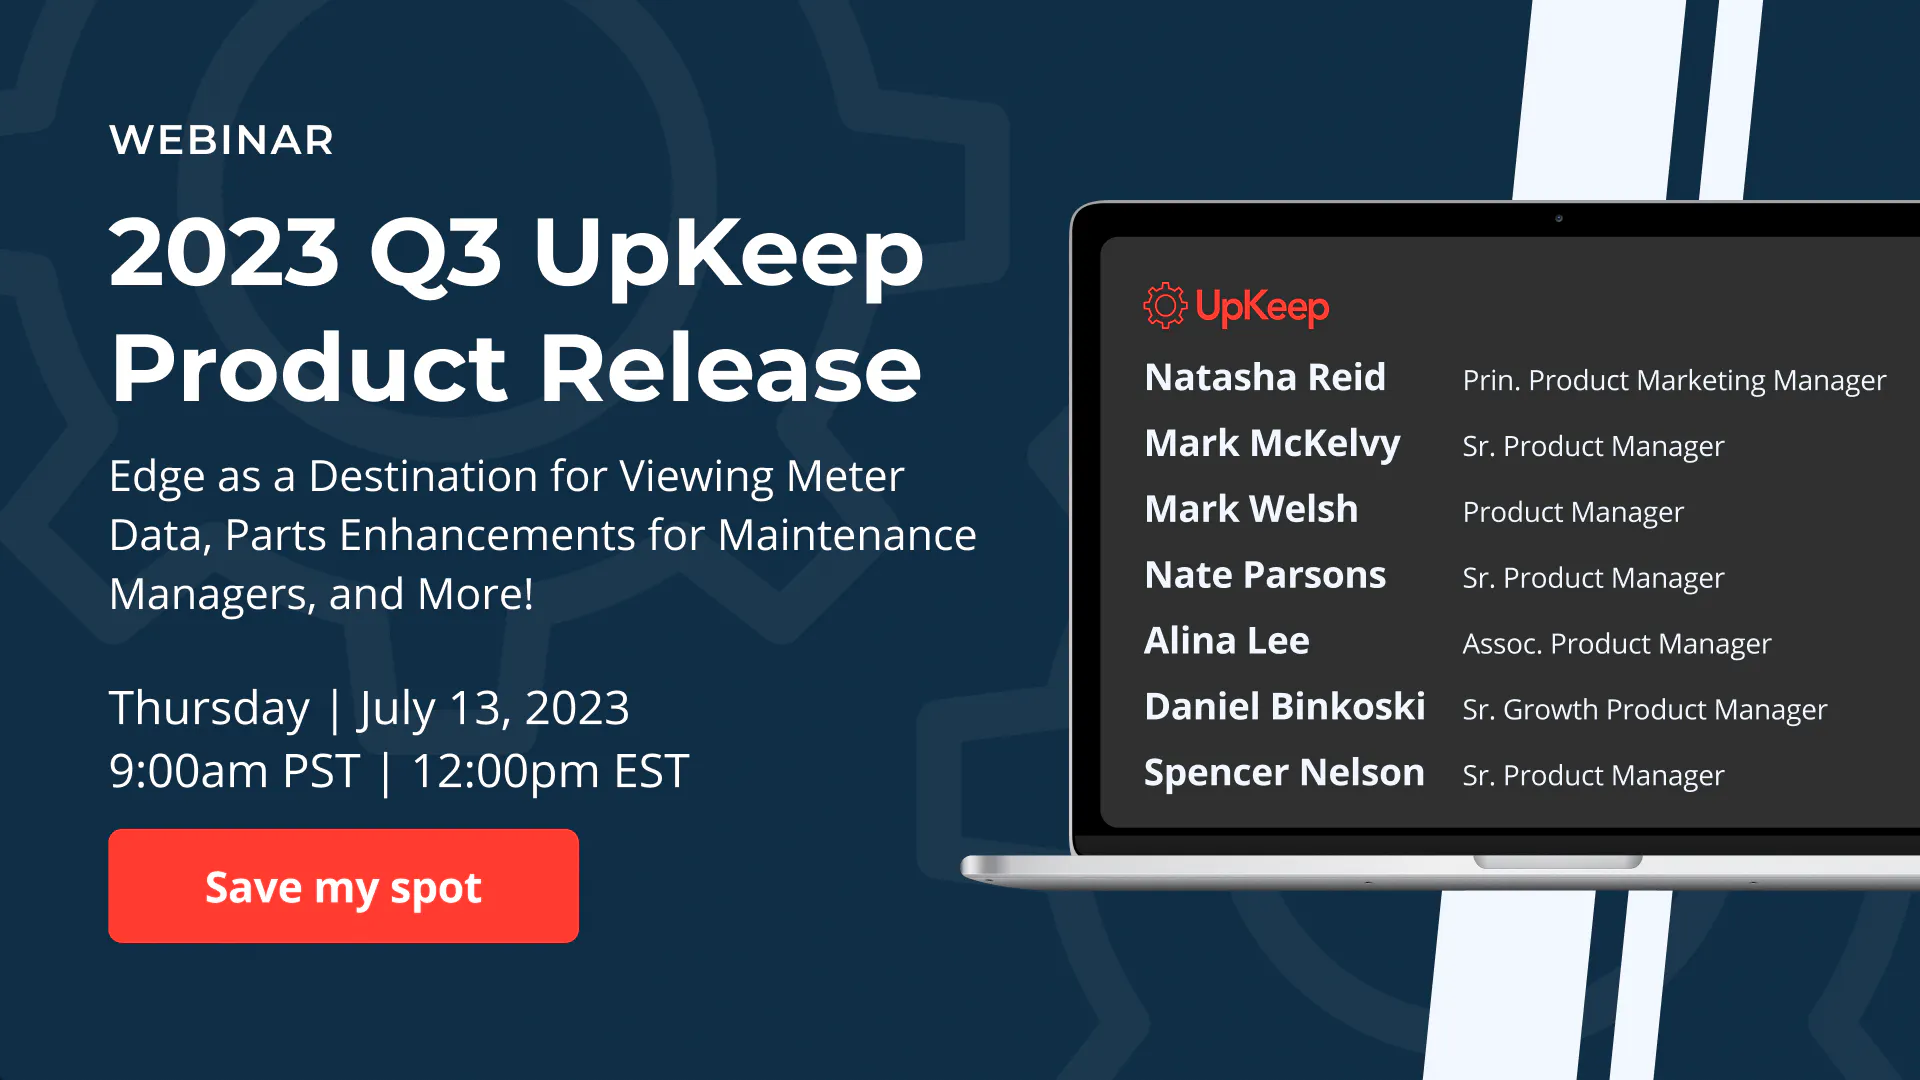 2023'Q3 UpKeep Product Release Webinar